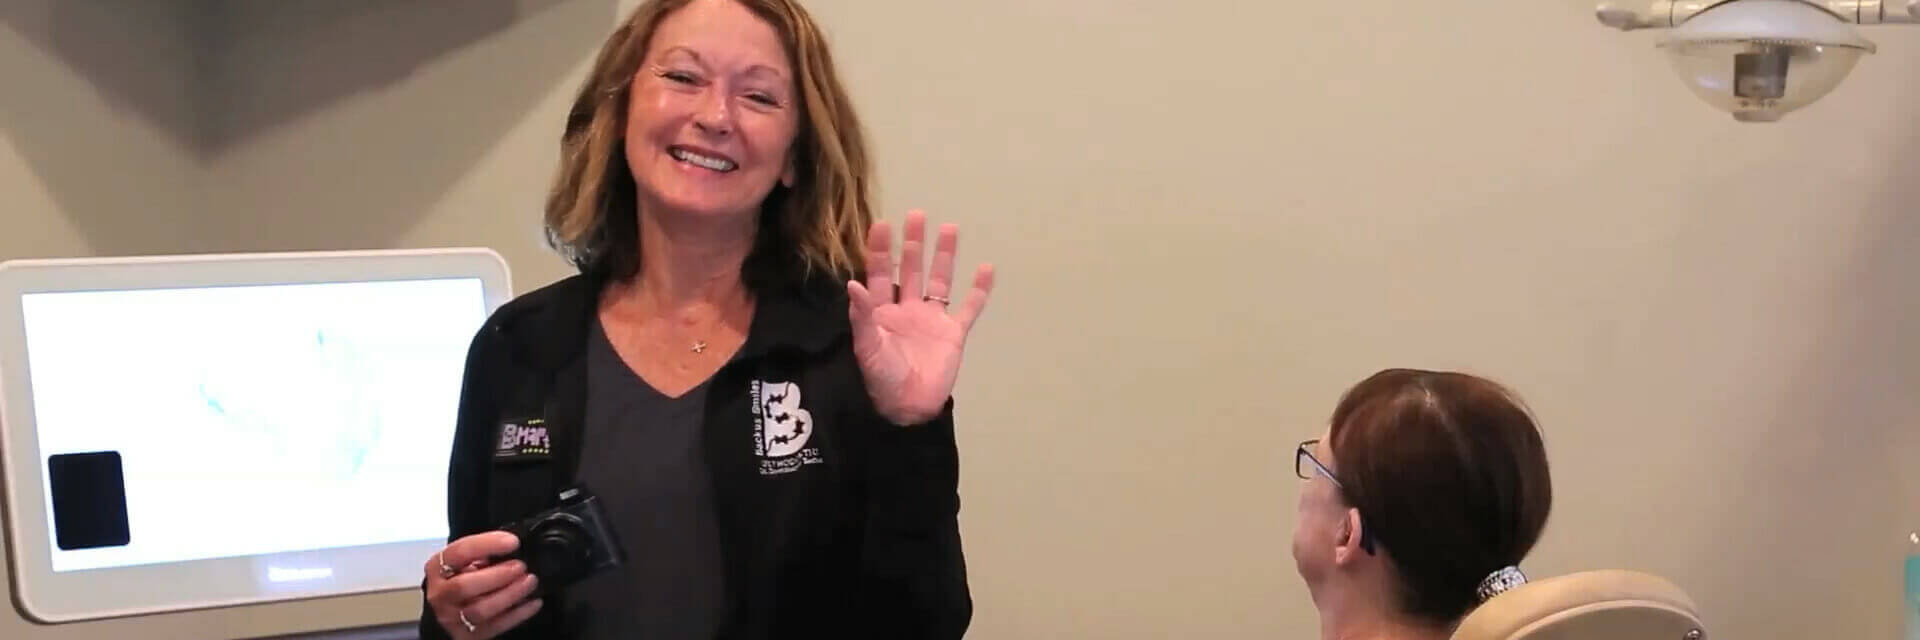 Backus Smiles, Backus Home Slider - Treatment coordinator waving hello